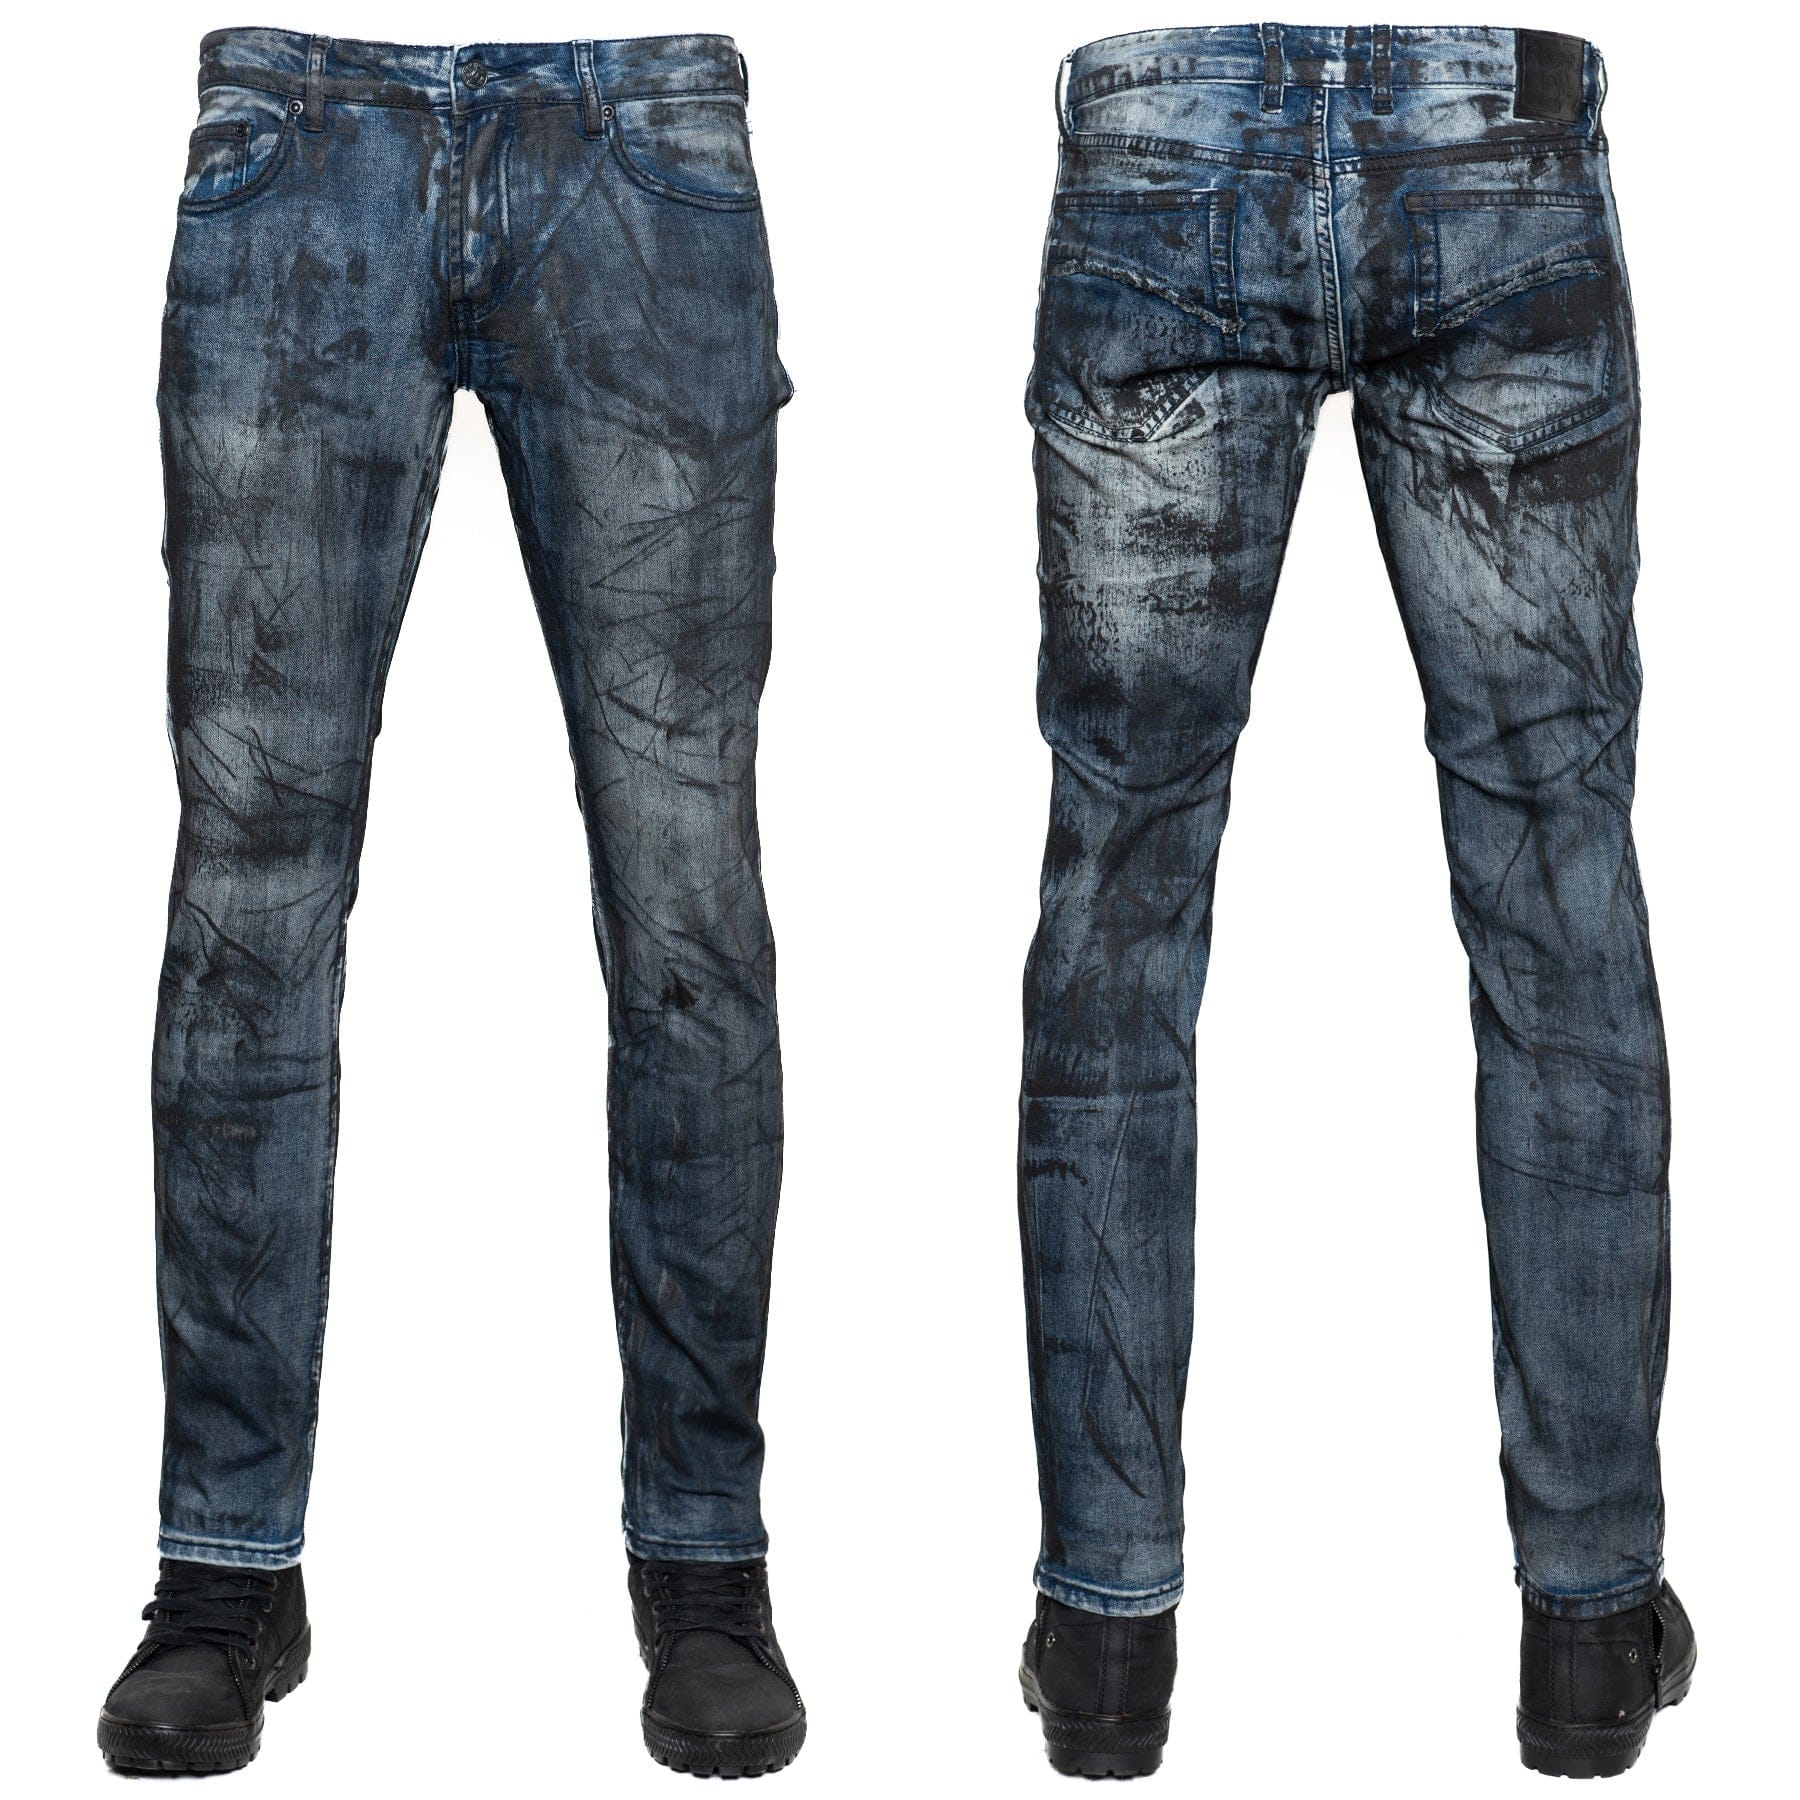 Custom Chop Shop Pants Wornstar Custom Jeans - Black Onyx Alloy Wash